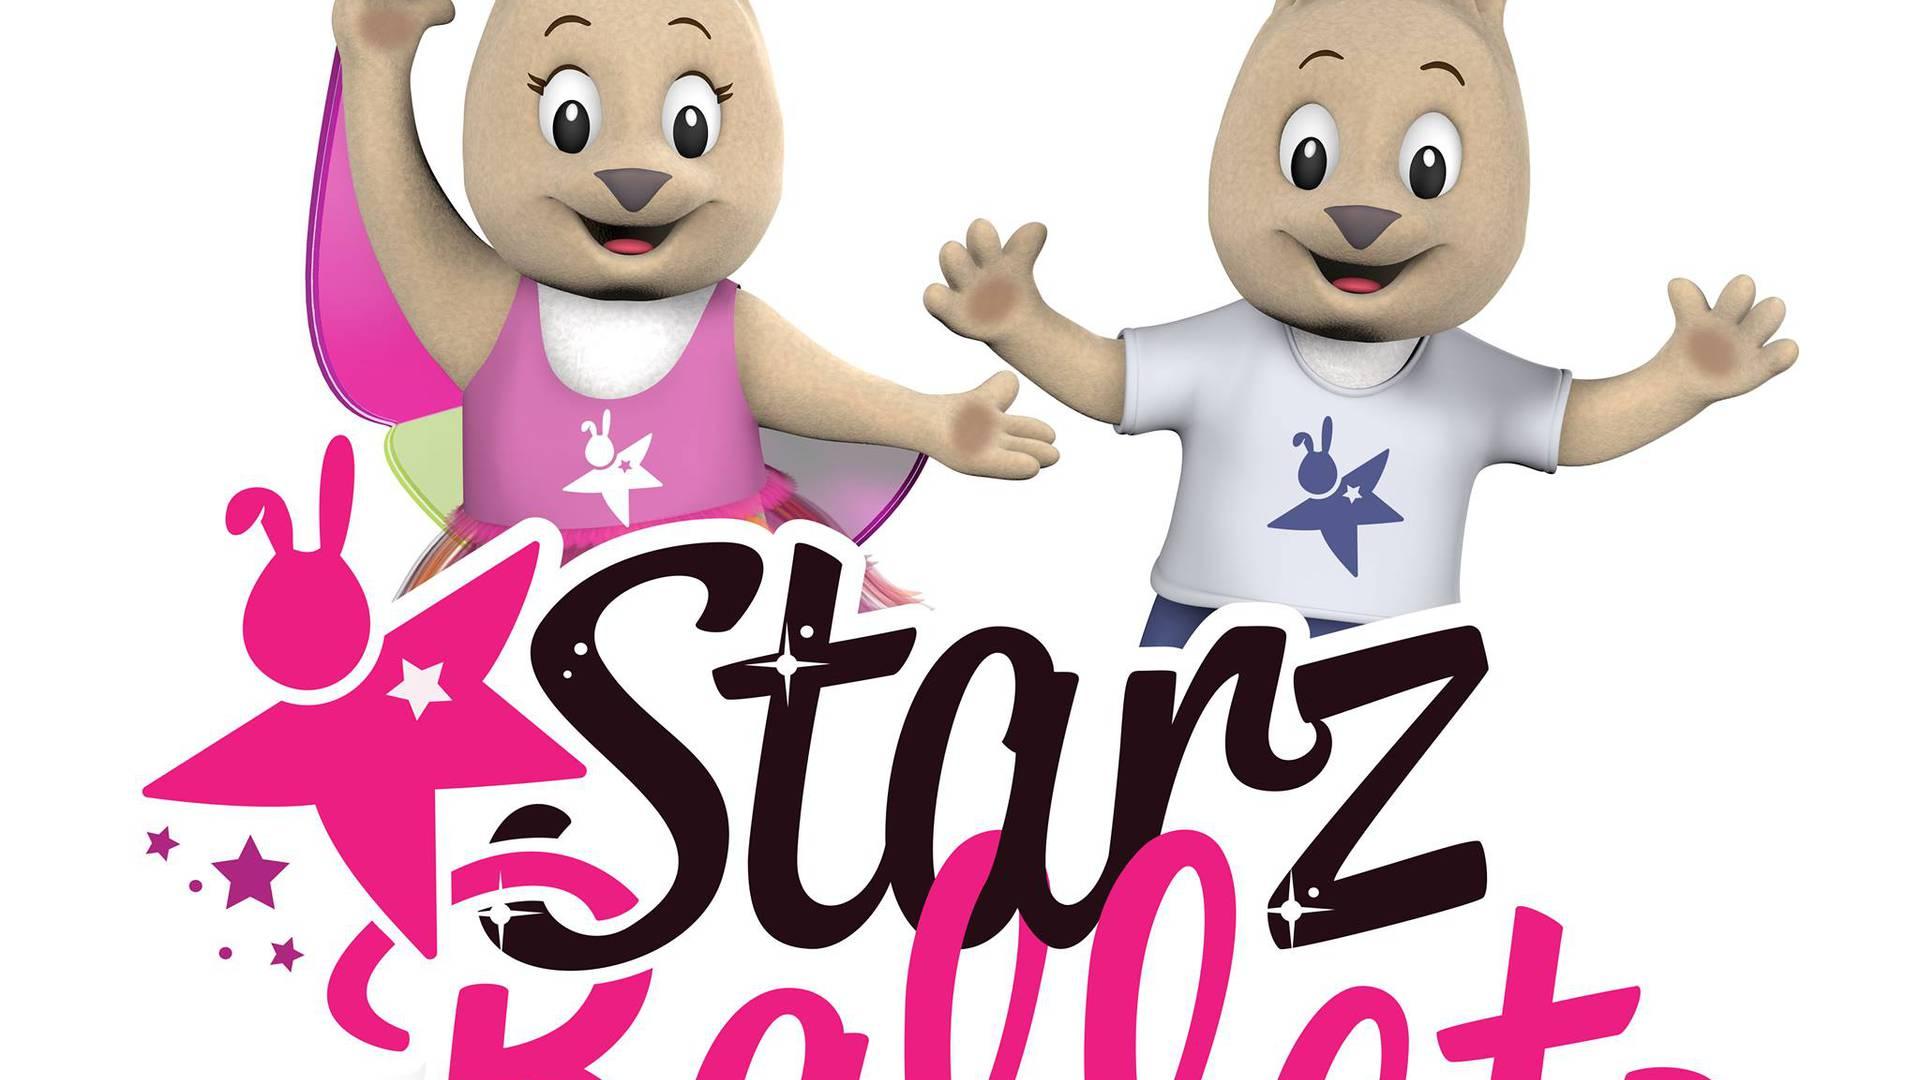 Starz Ballet - New account opened enquiries@starzballet.com photo